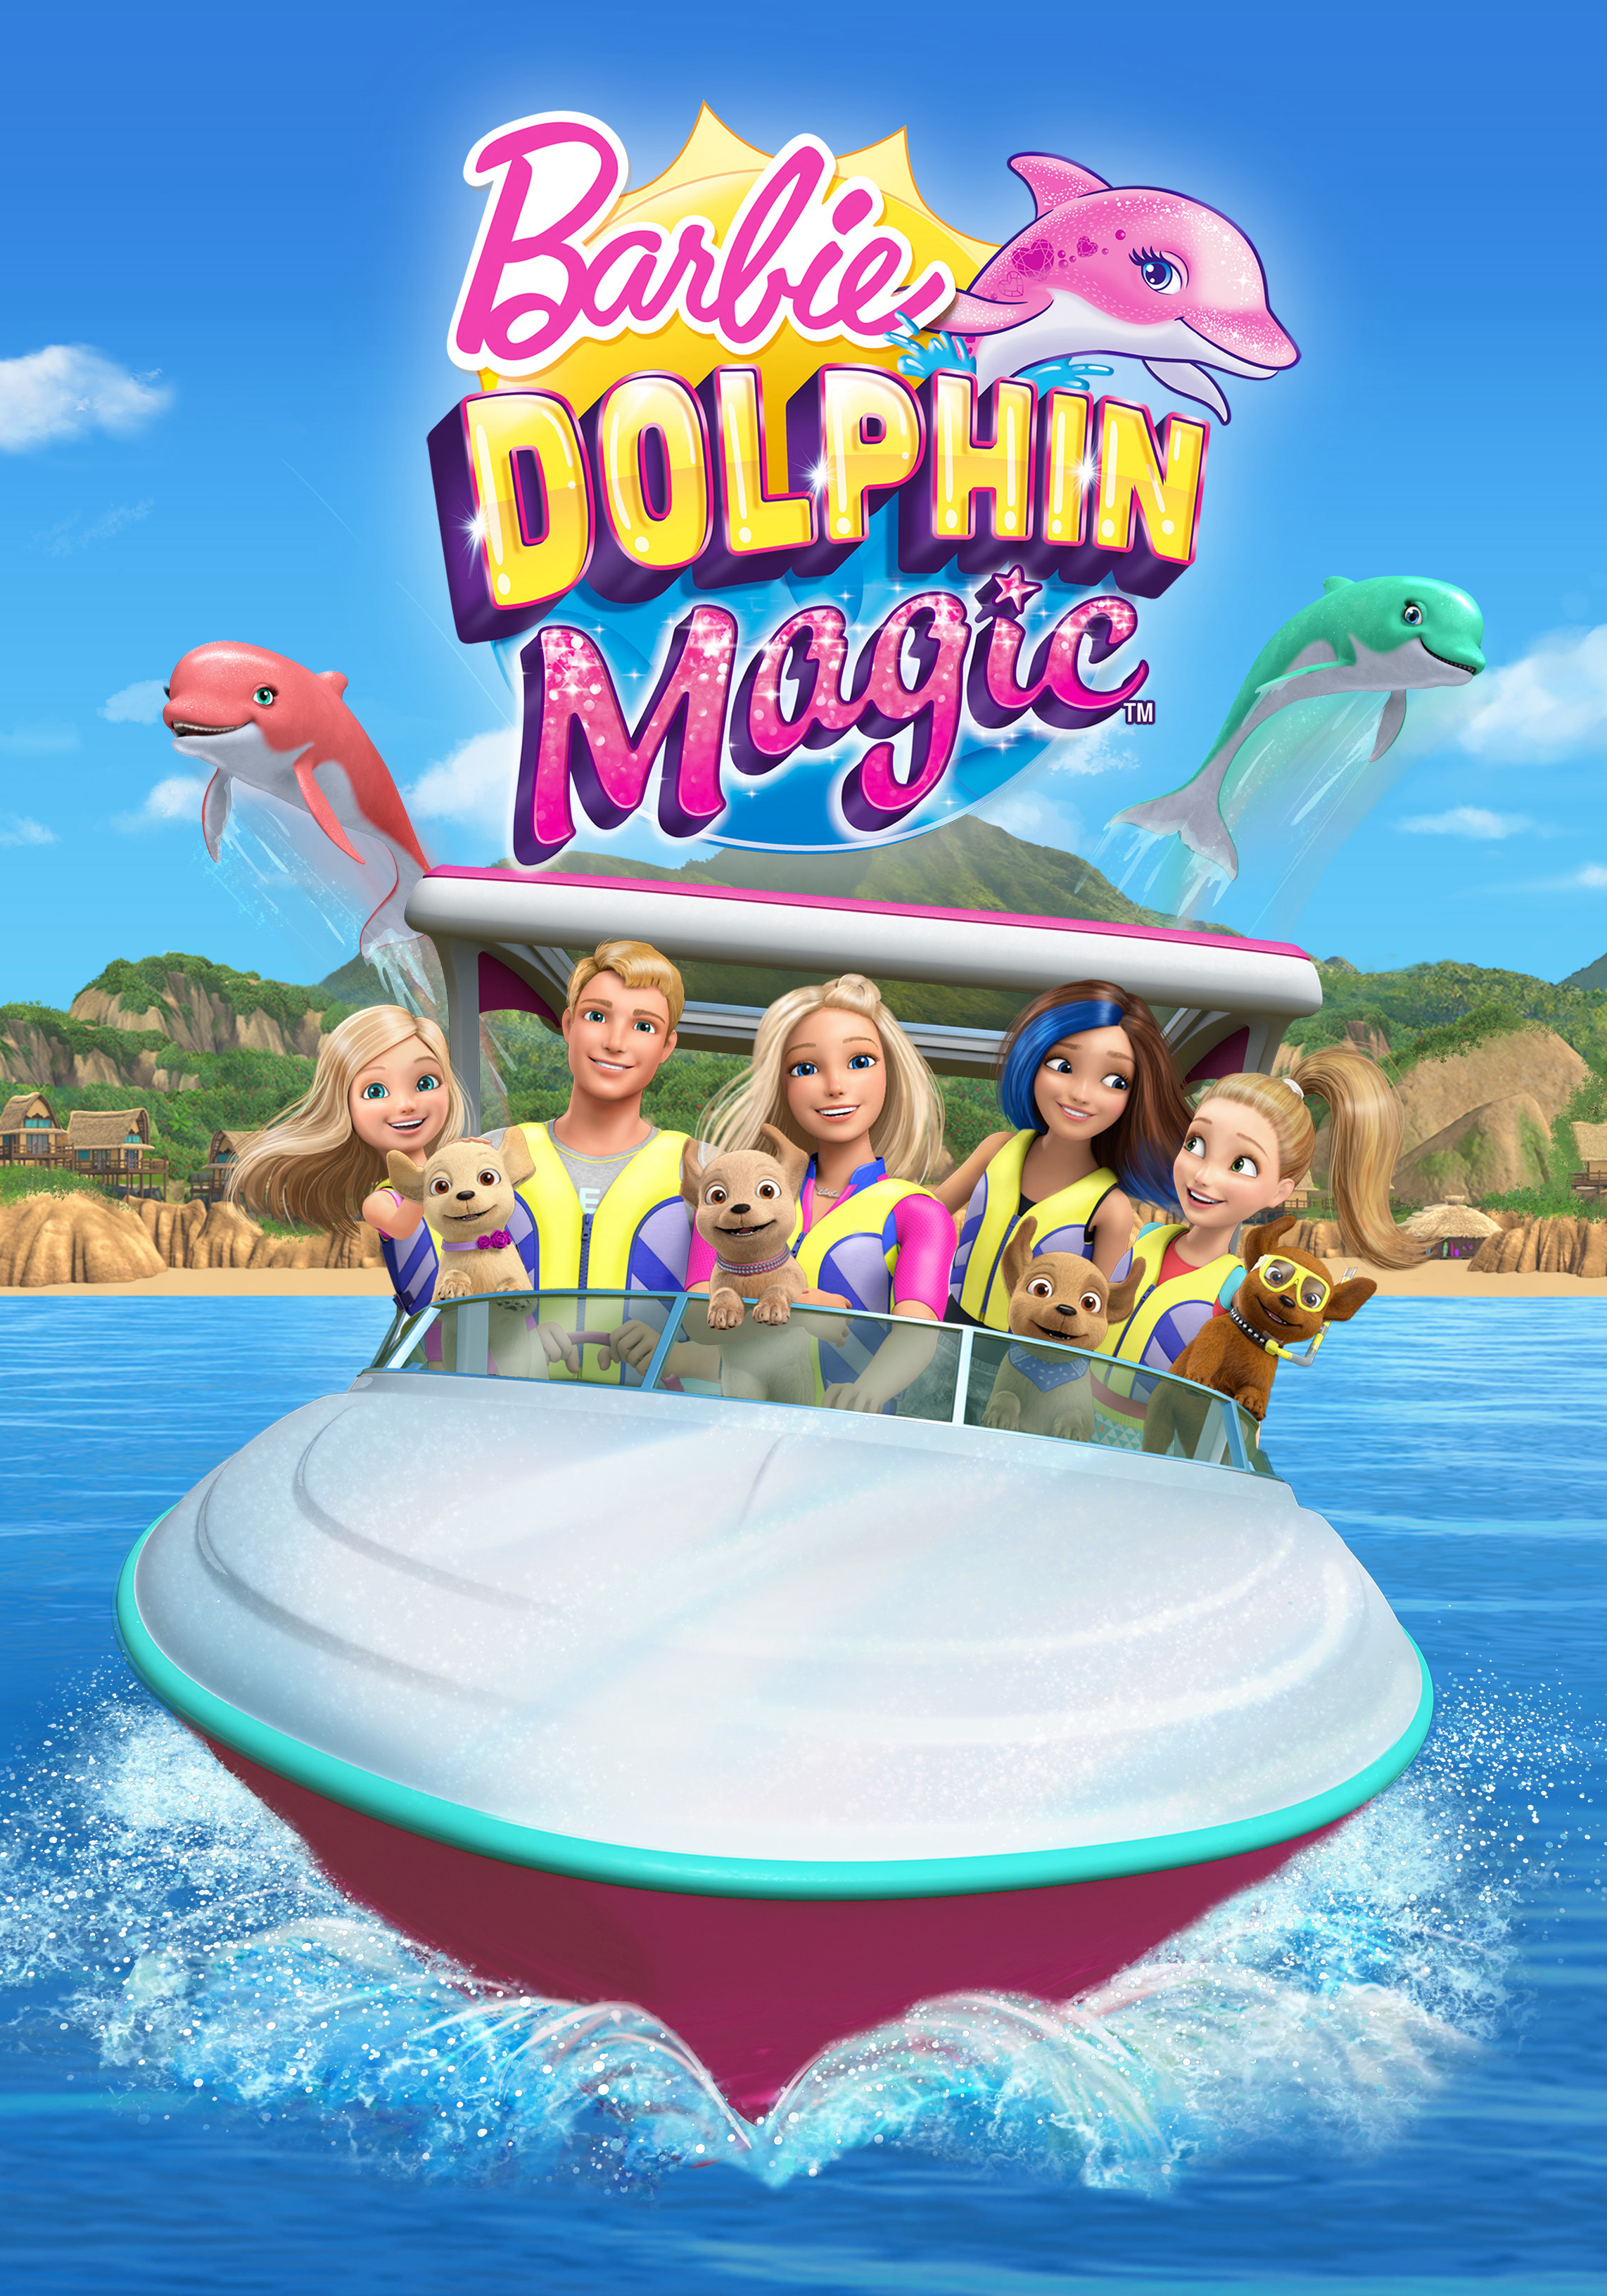 Poster Phim Barbie Dolphin Magic (Barbie Dolphin Magic)